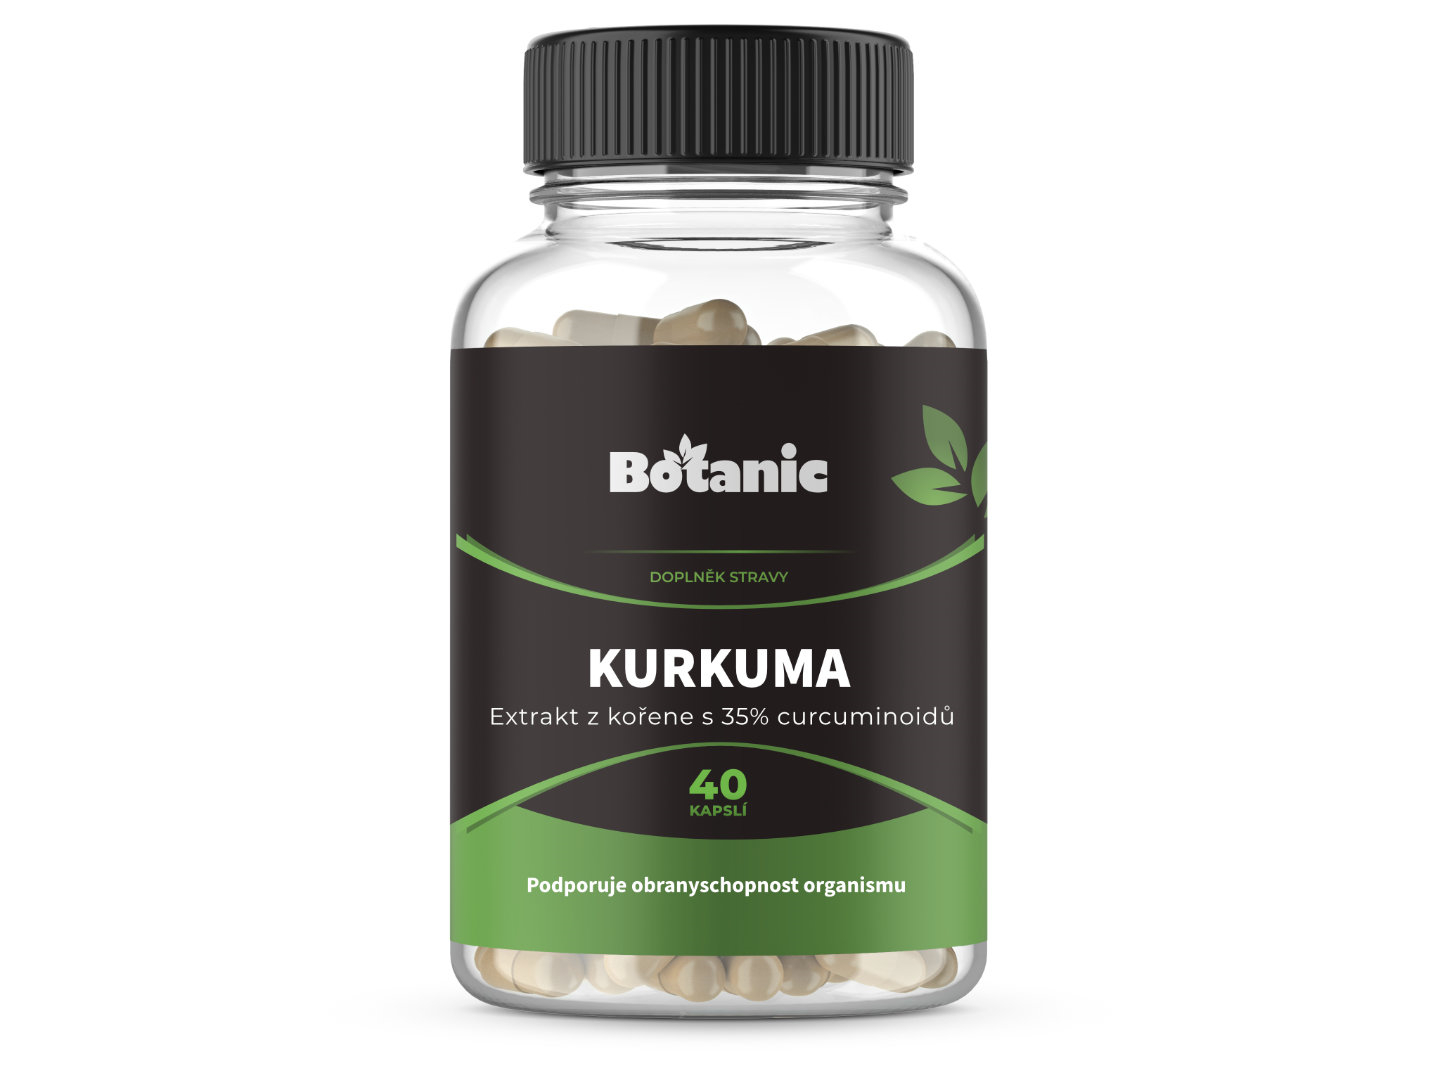 Botanic Kurkuma - Extrakt z kořene s 35% curcuminoidů v kapslích 40kap.